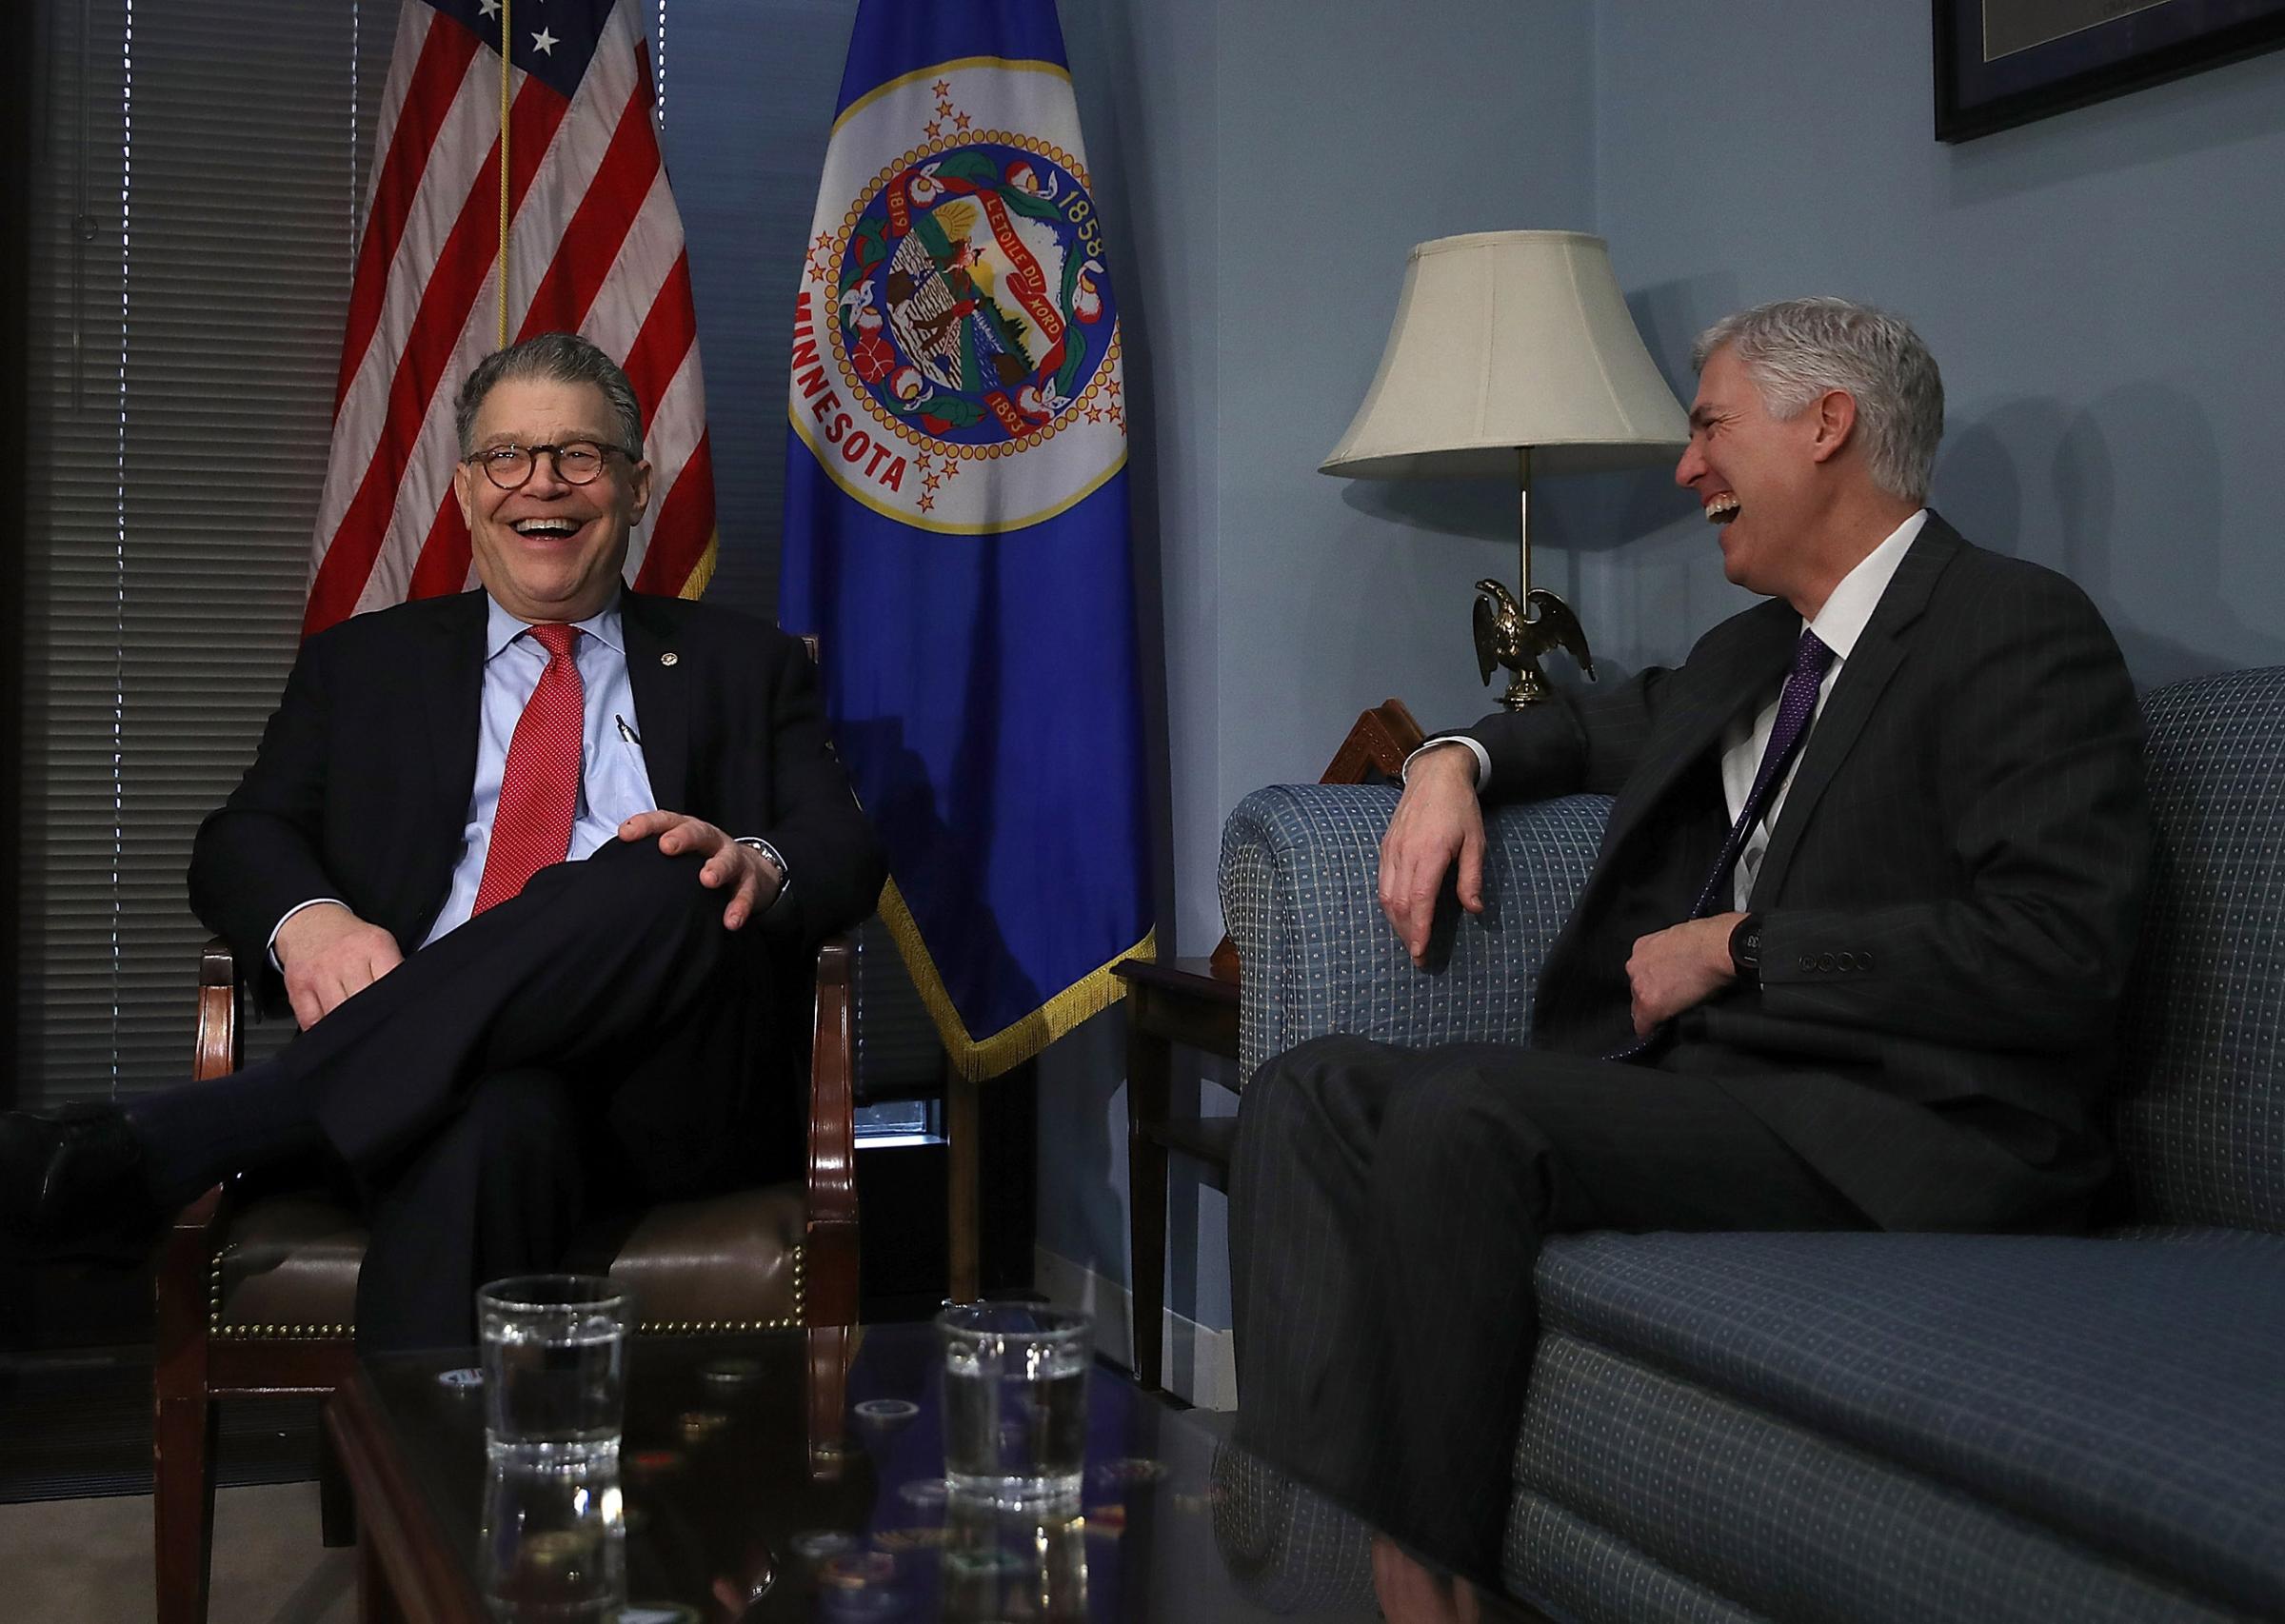 U.S. Supreme Court nominee Judge Neil Gorsuch (R) meets with U.S. Sen. Al Franken (D-MN) in Franken's office on Capitol Hill March 7, 2017 in Washington, D.C.